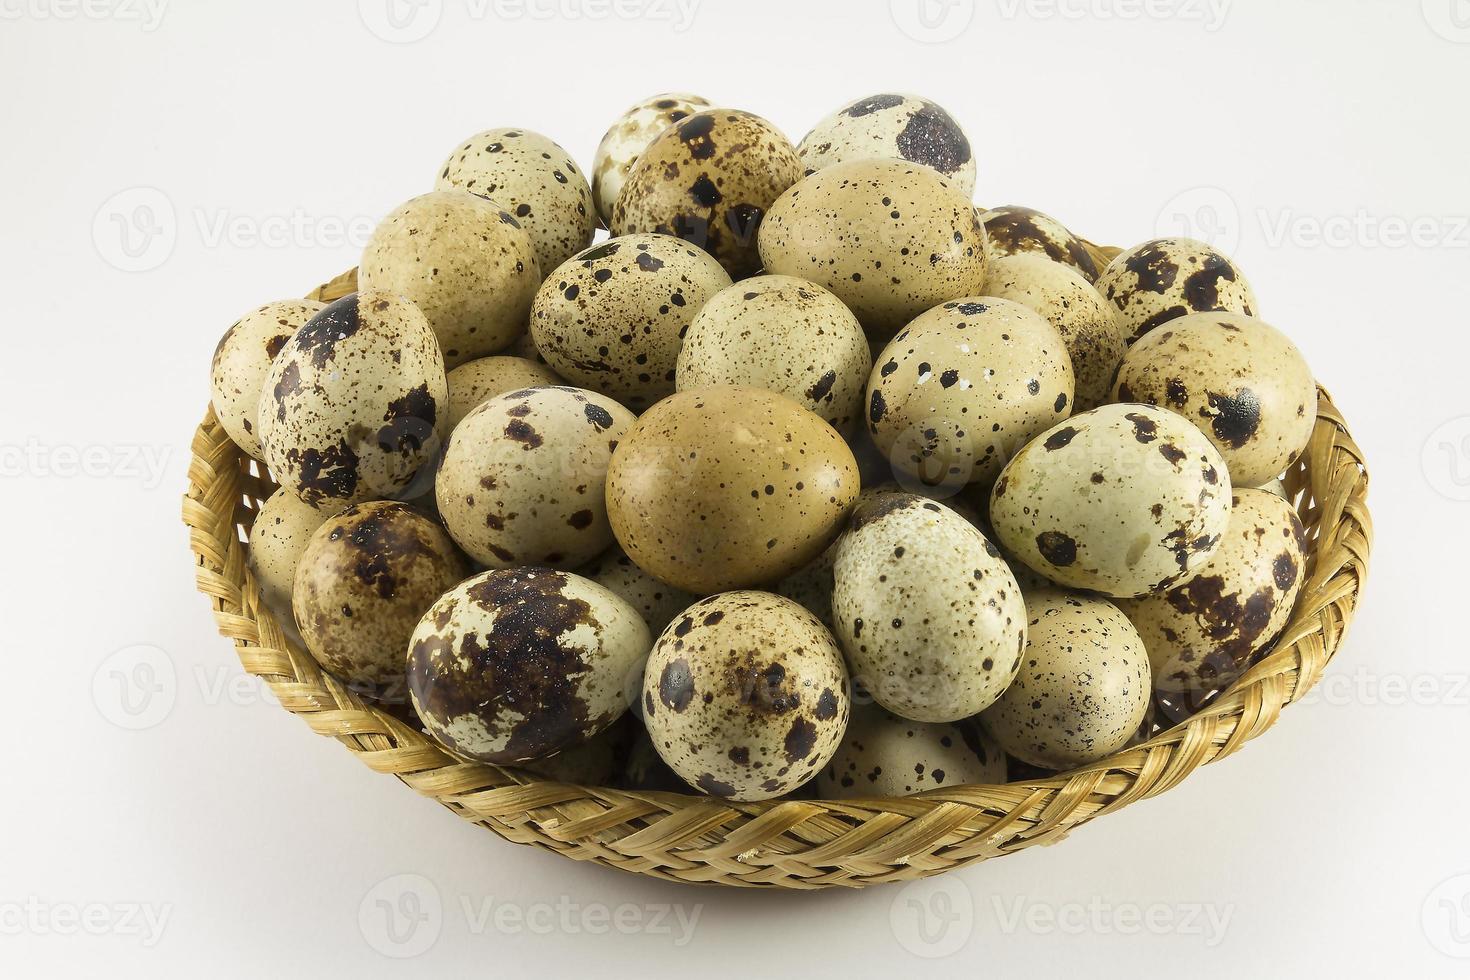 Quail eggs in a wicker oval shape photo